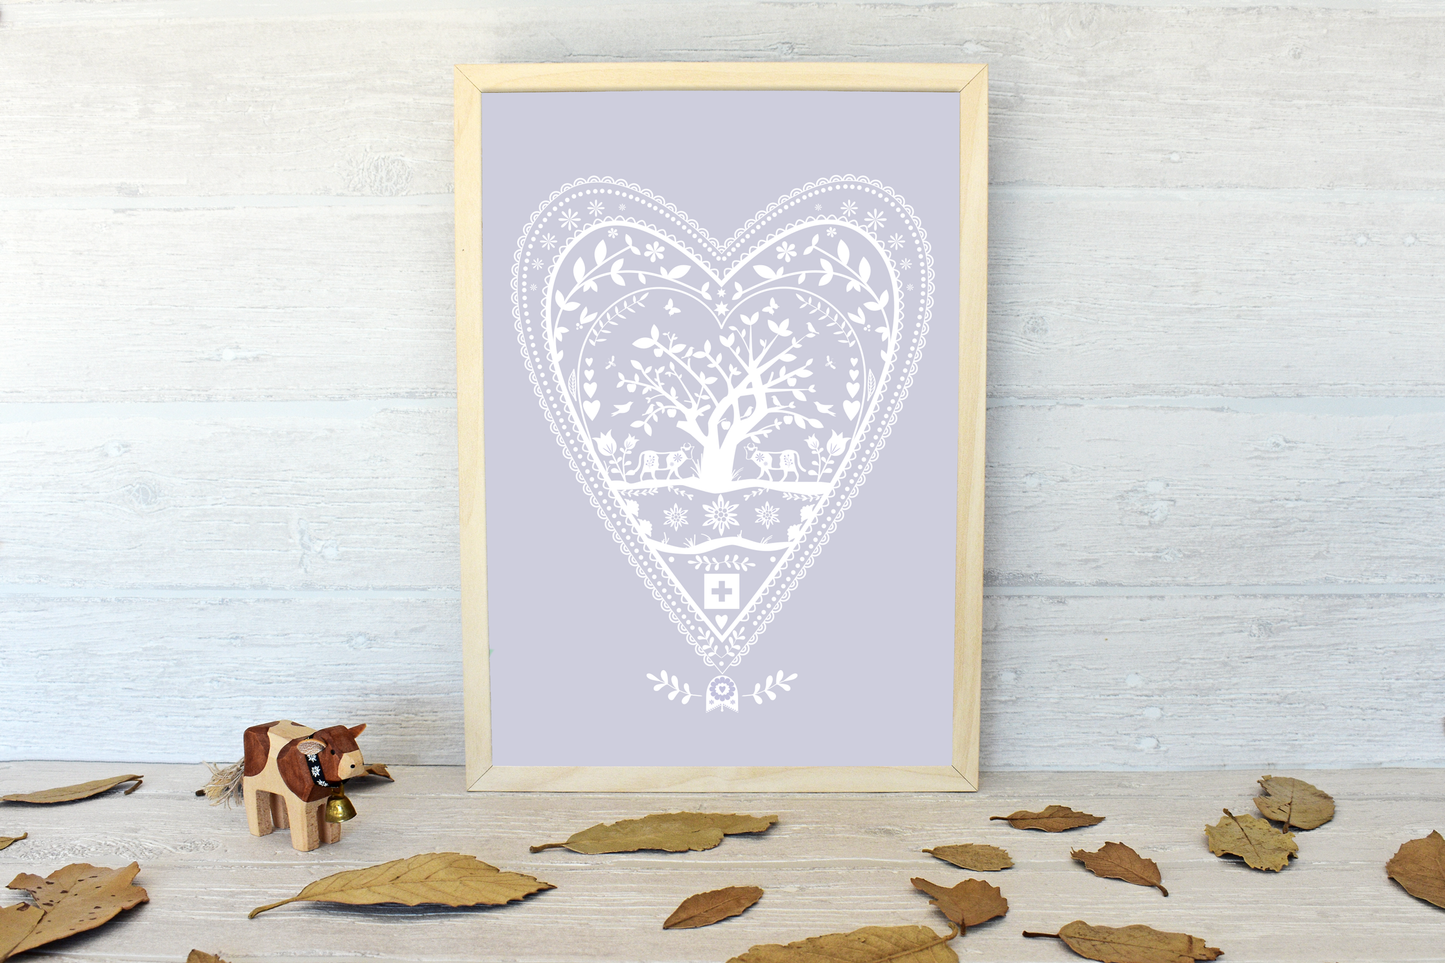 Swiss Paper Cut Heart Art Print (lavender)